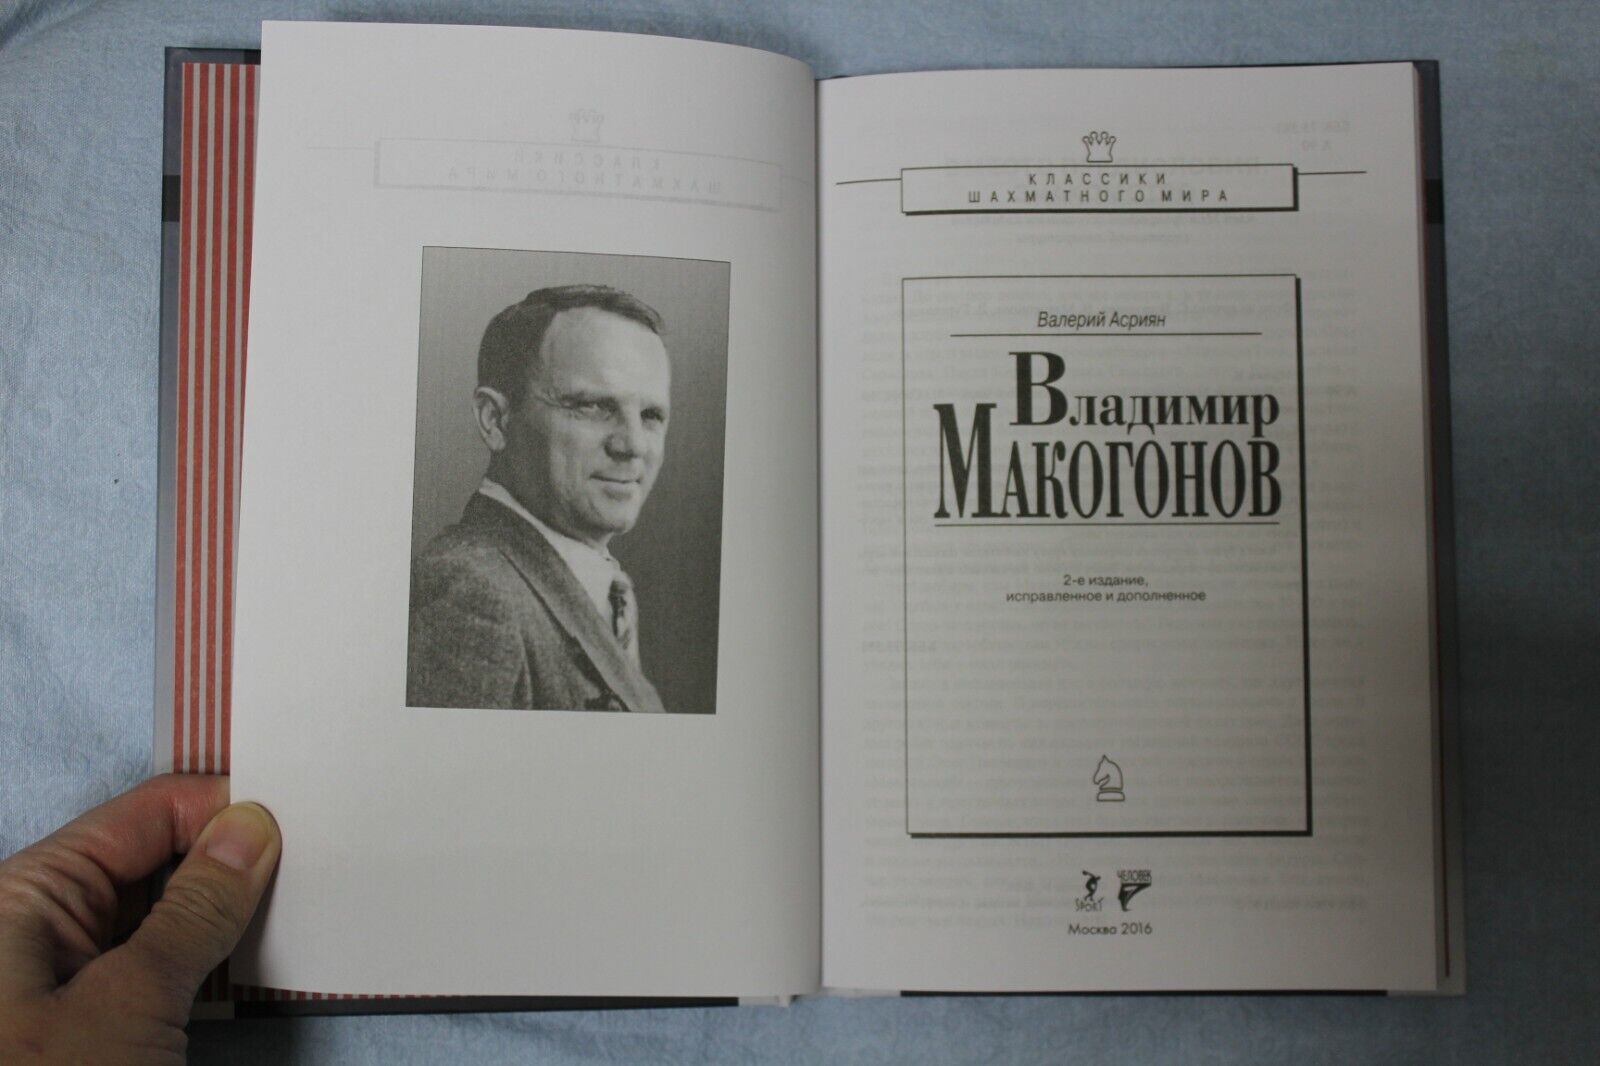 11547.Russian Chess Book: Vladimir Makogonov w Photos, 2016 V. Asriyan